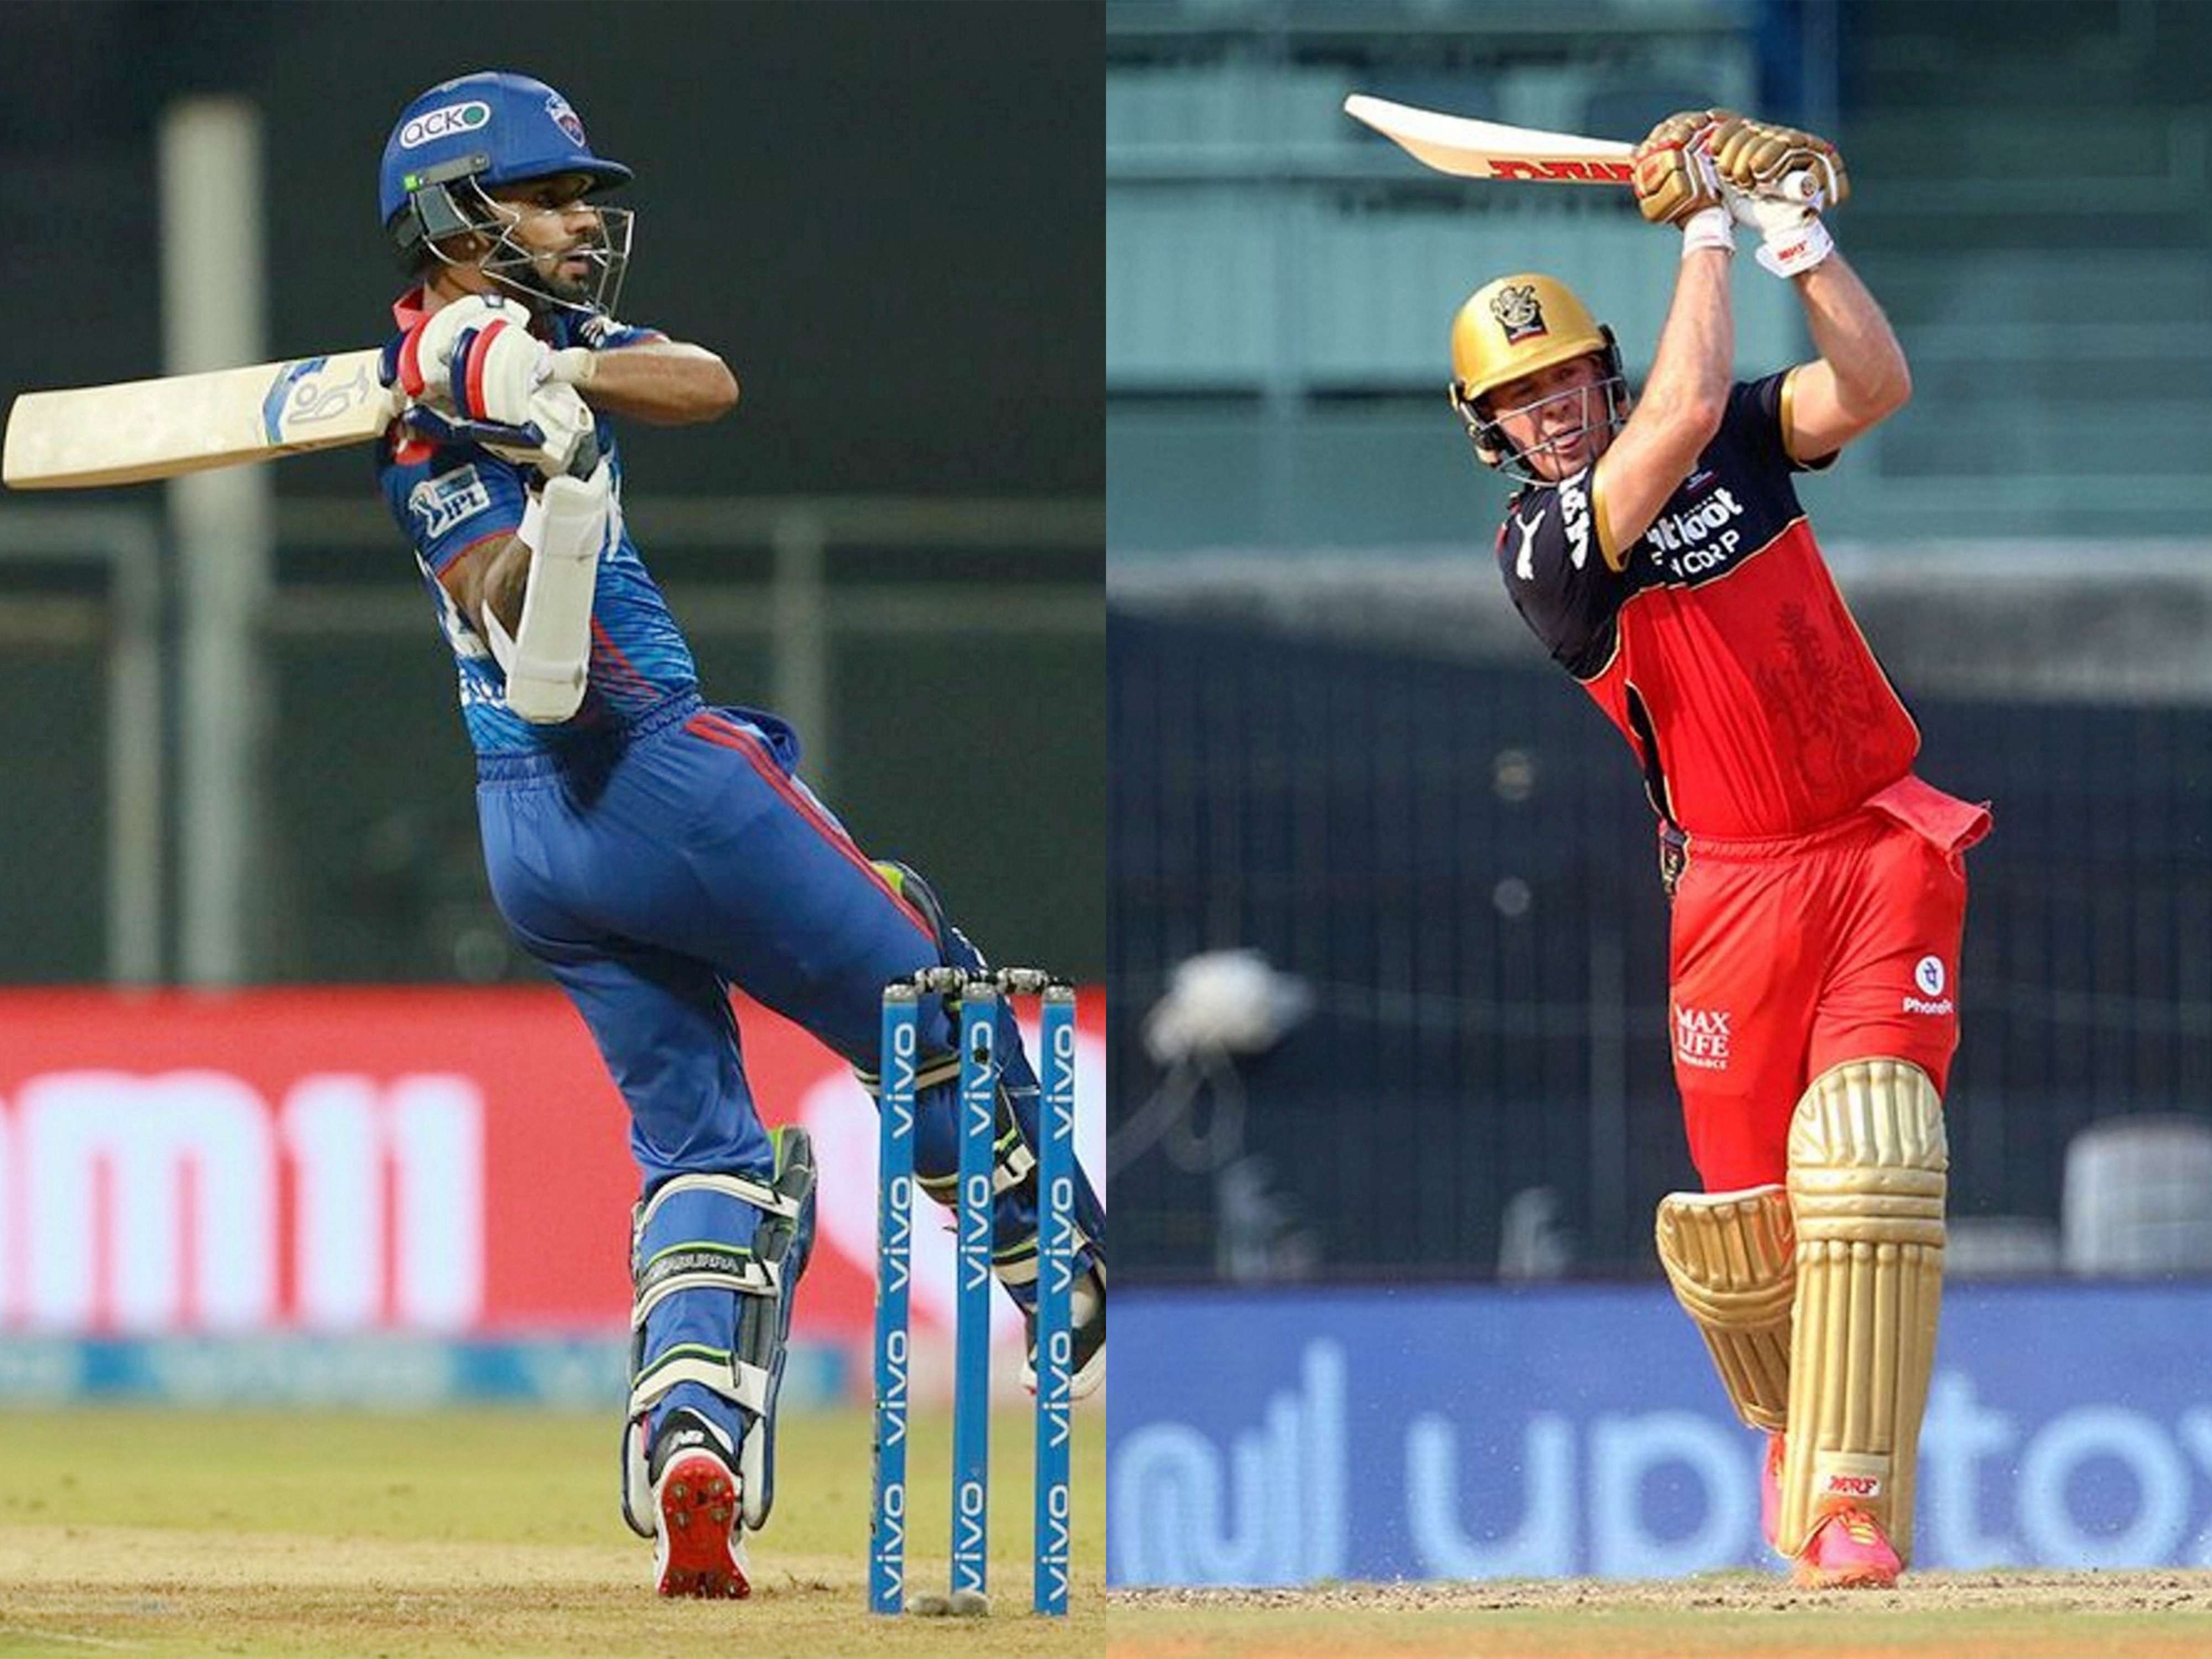 AB de Villiers and Shikhar Dhawan 'leading lights' of IPL 2021 so far, says VVS Laxman | Cricket News - Times of India